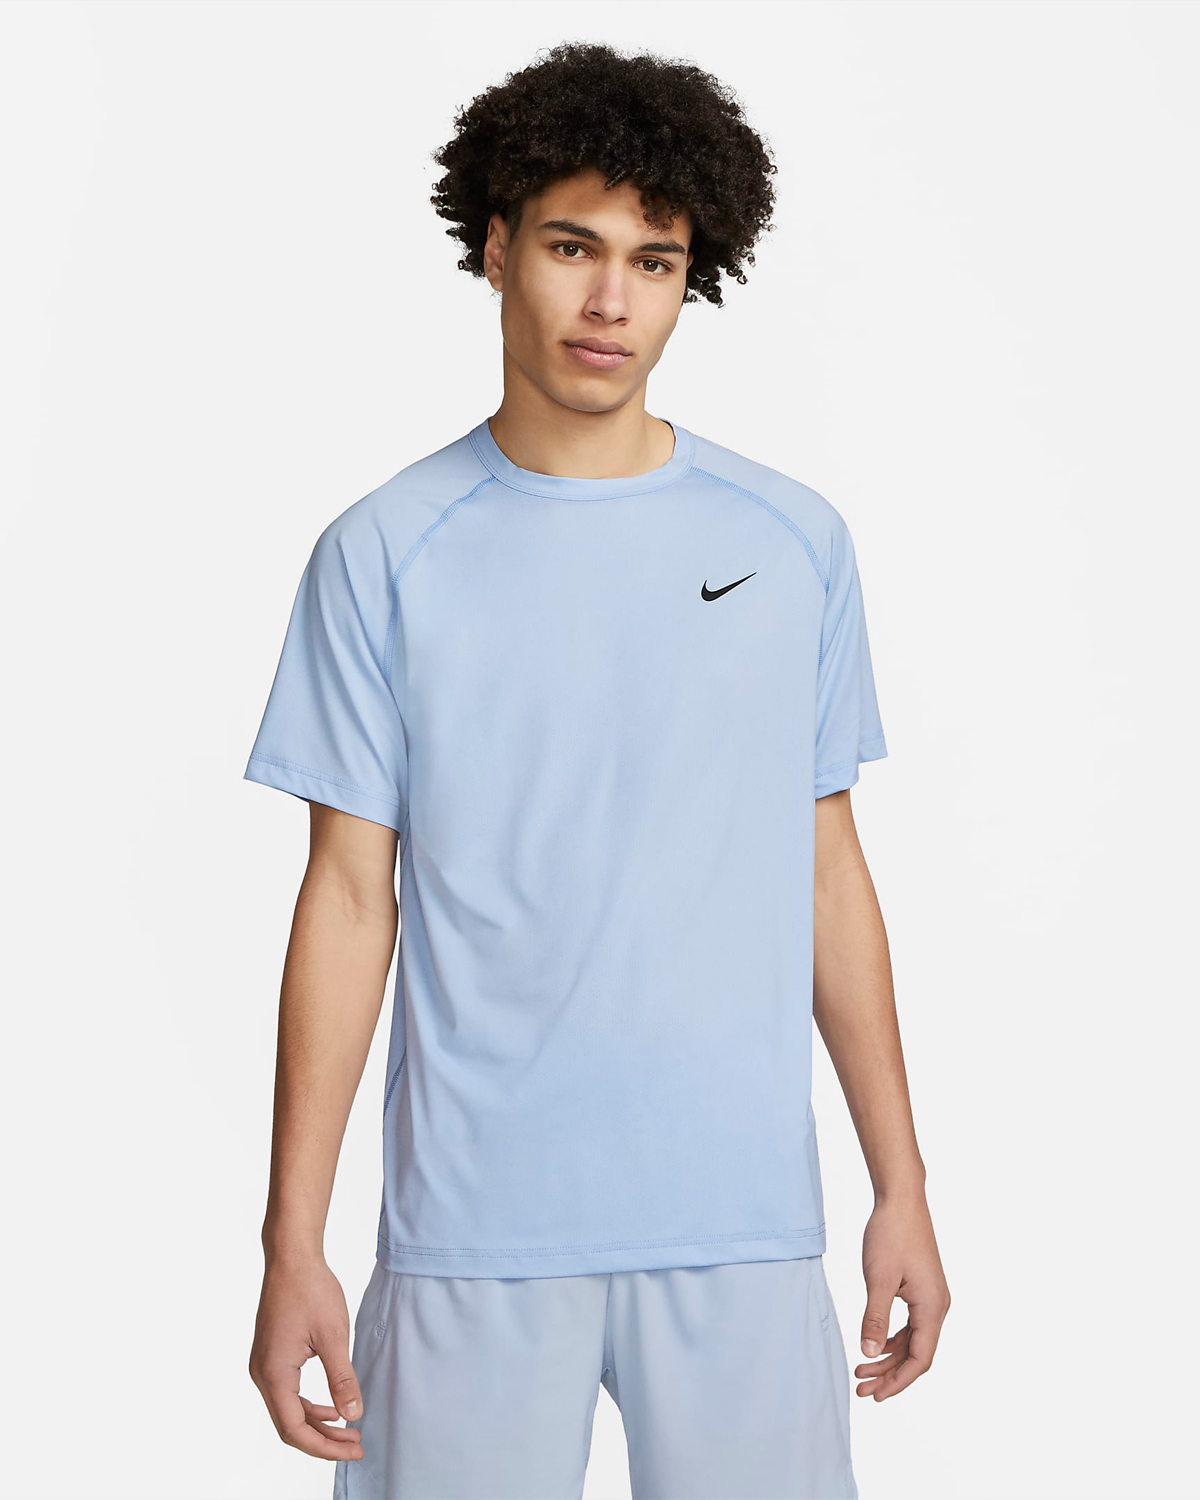 Nike-Dri-FIT-Shirt-Cobalt-Bliss